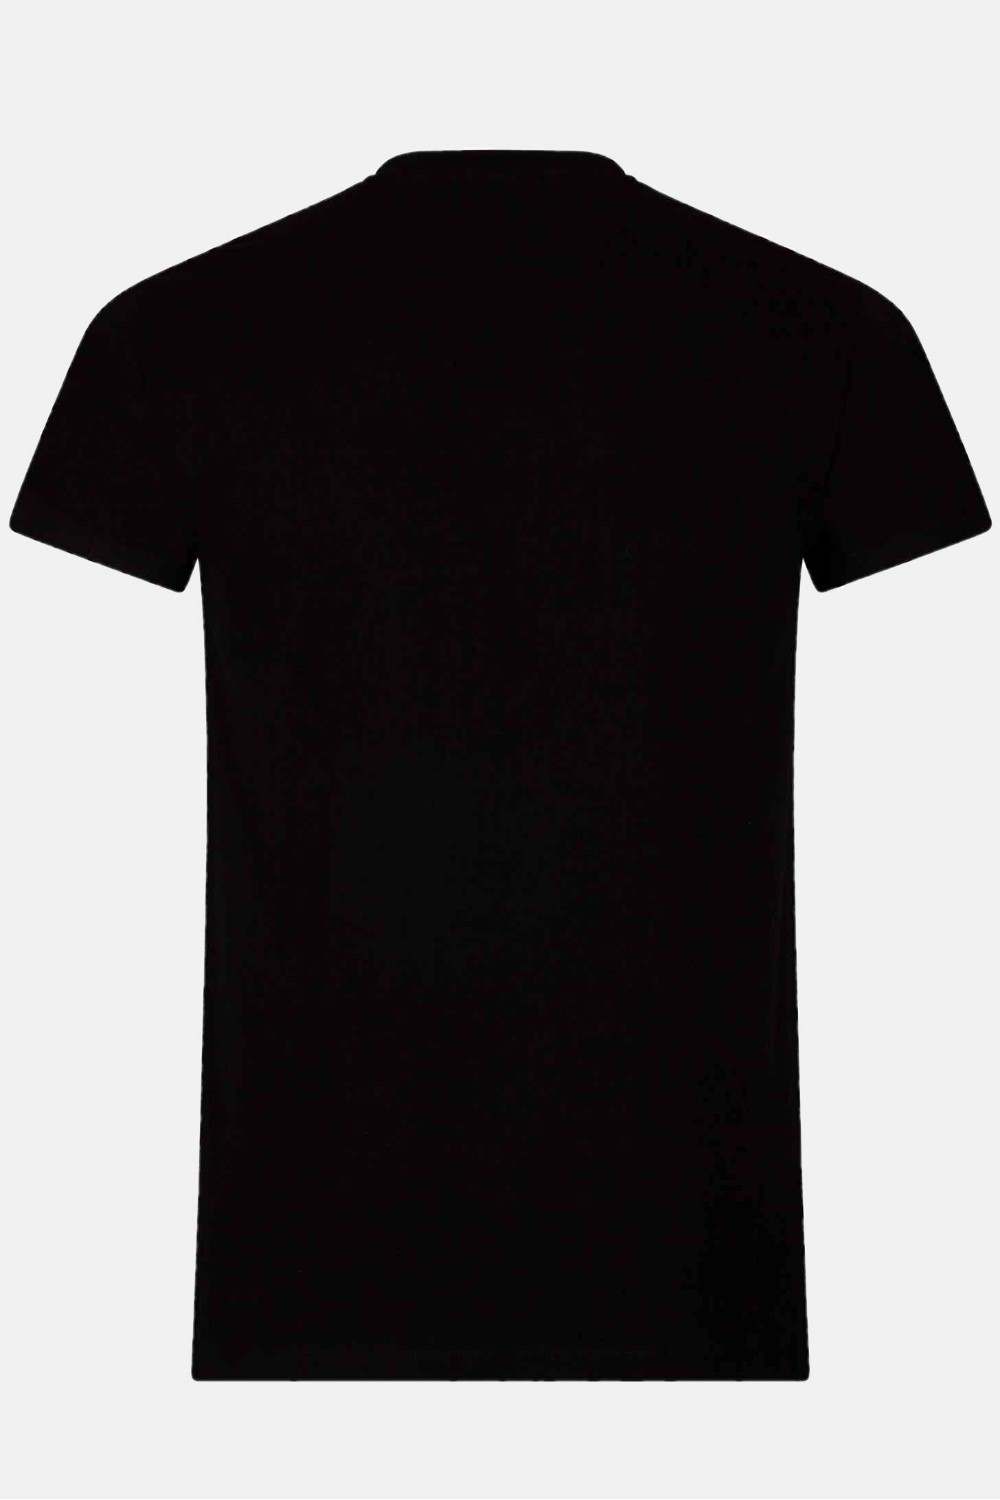 Street tee shirt homme noir - Patrice Catanzaro Site Officiel